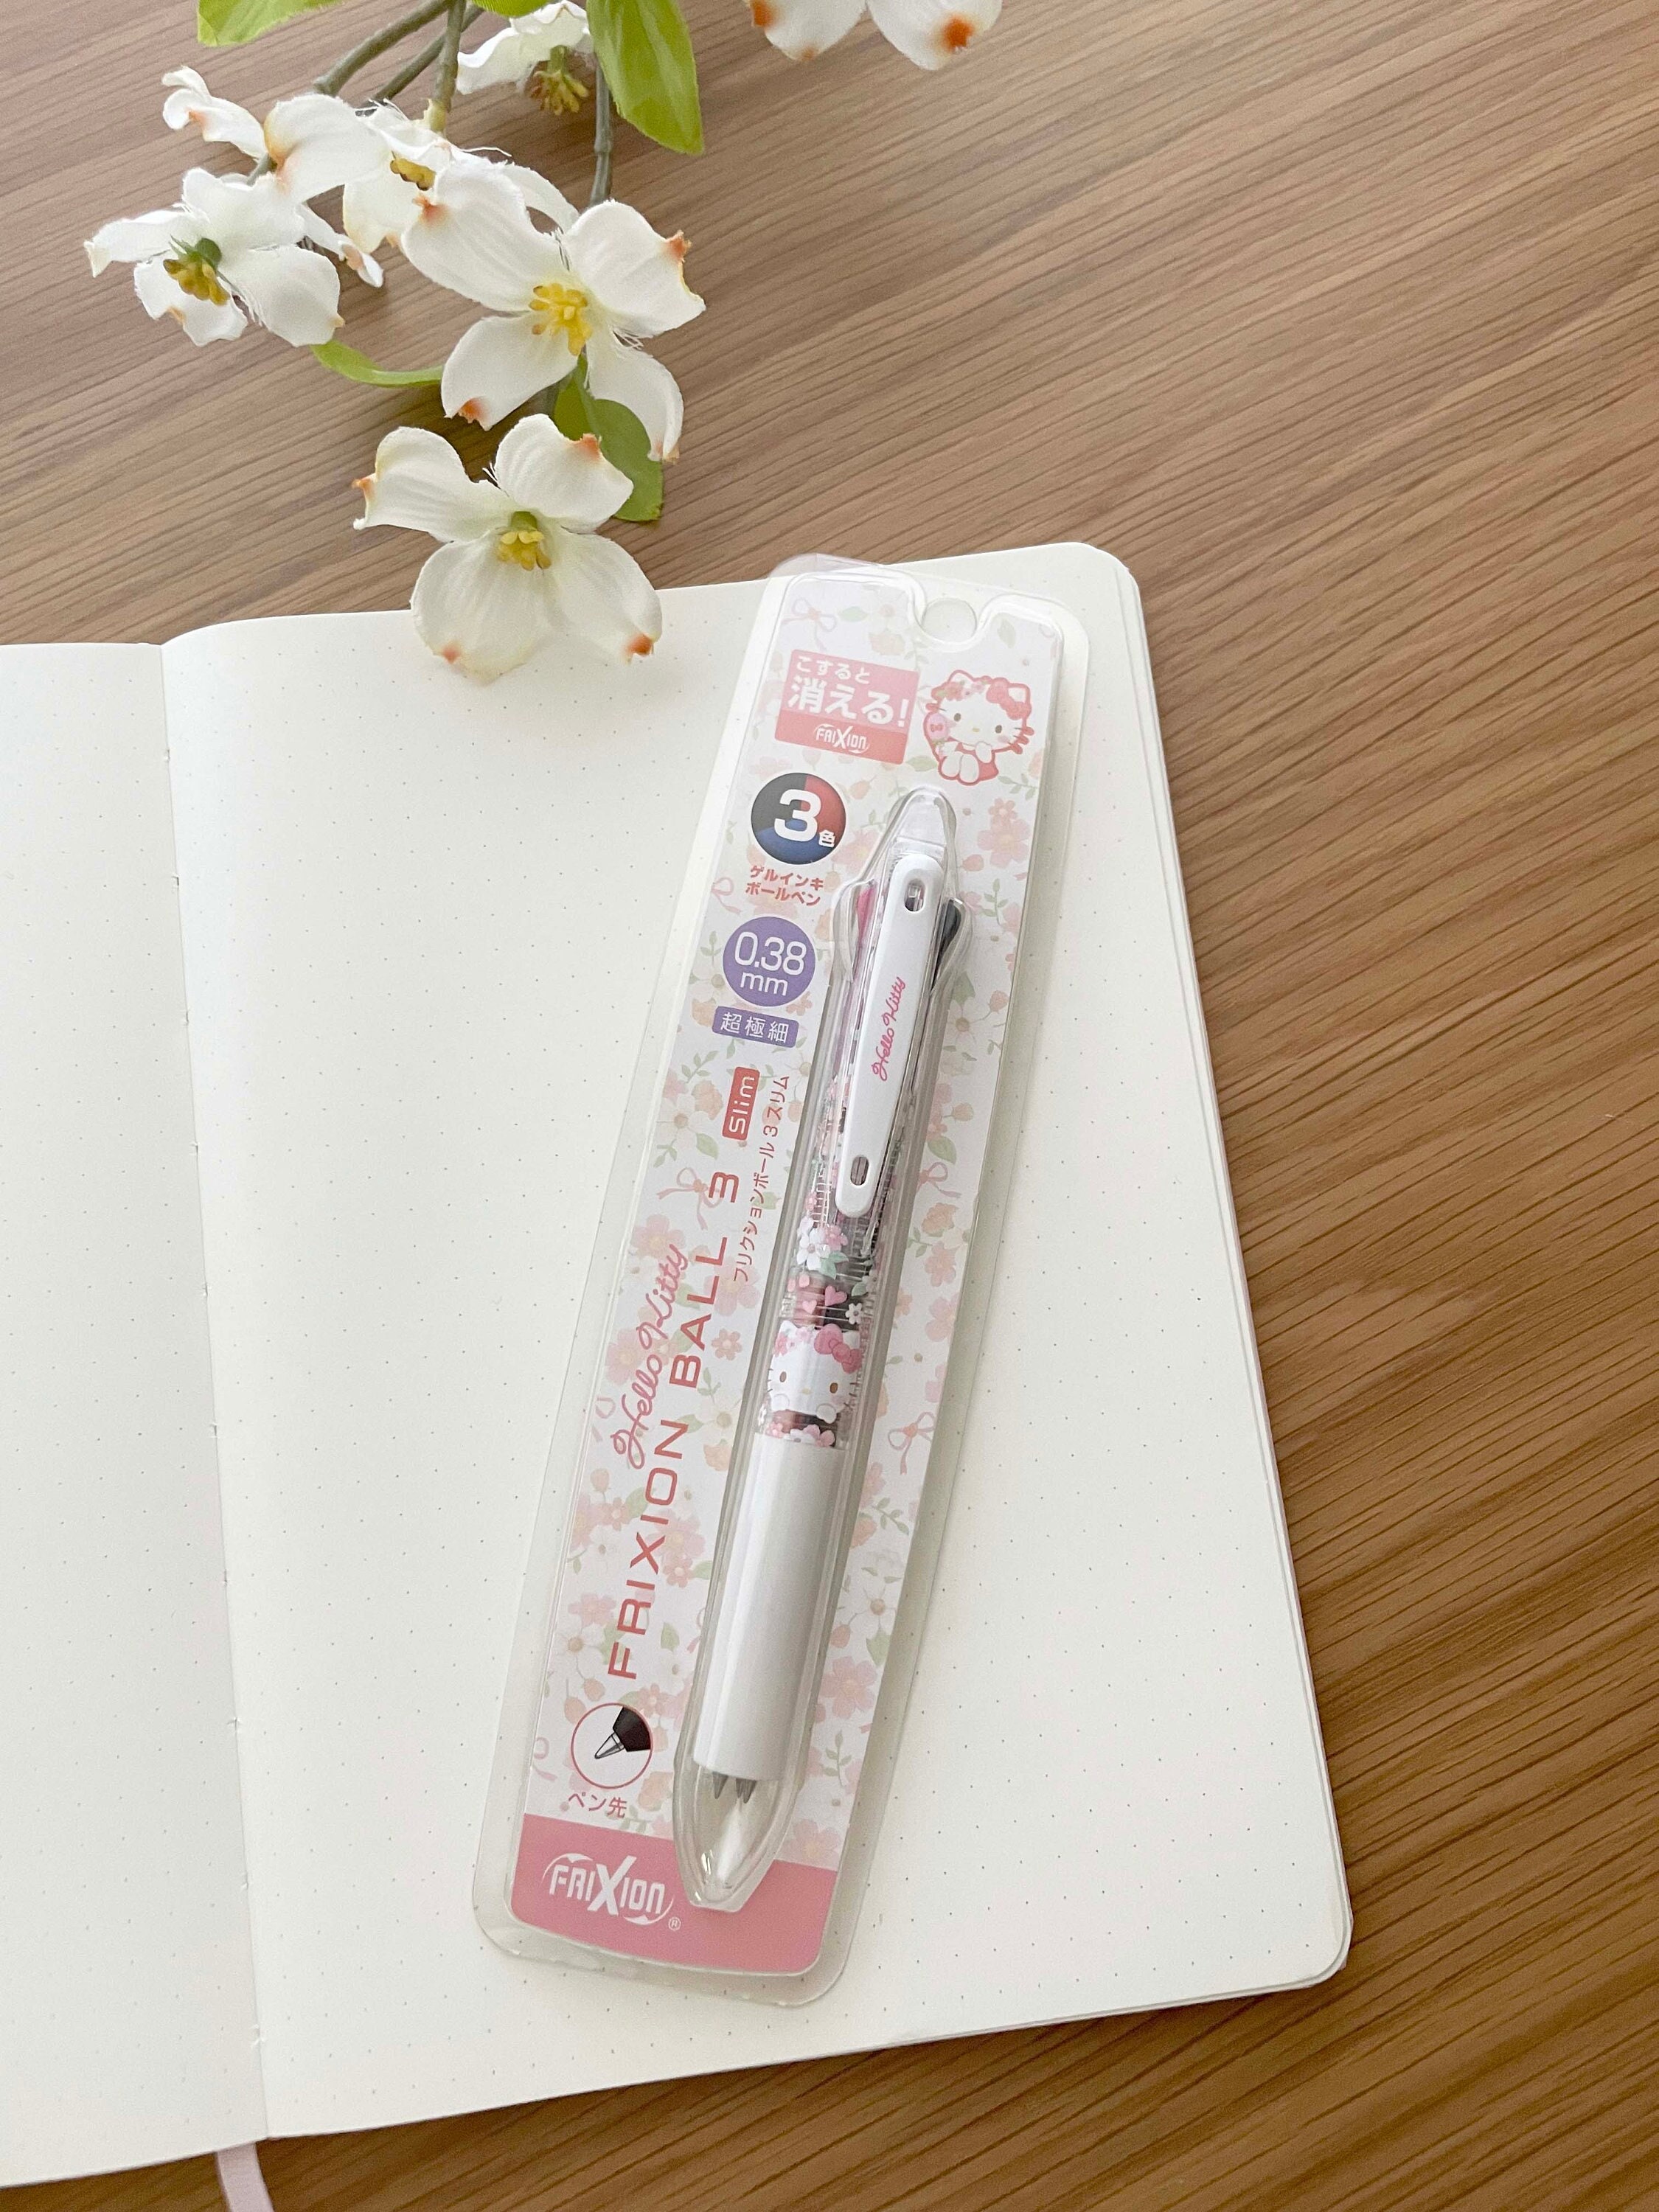 2x Flower Hello Kitty 3in1 Pens Multi-color Soft Grip Black Screen